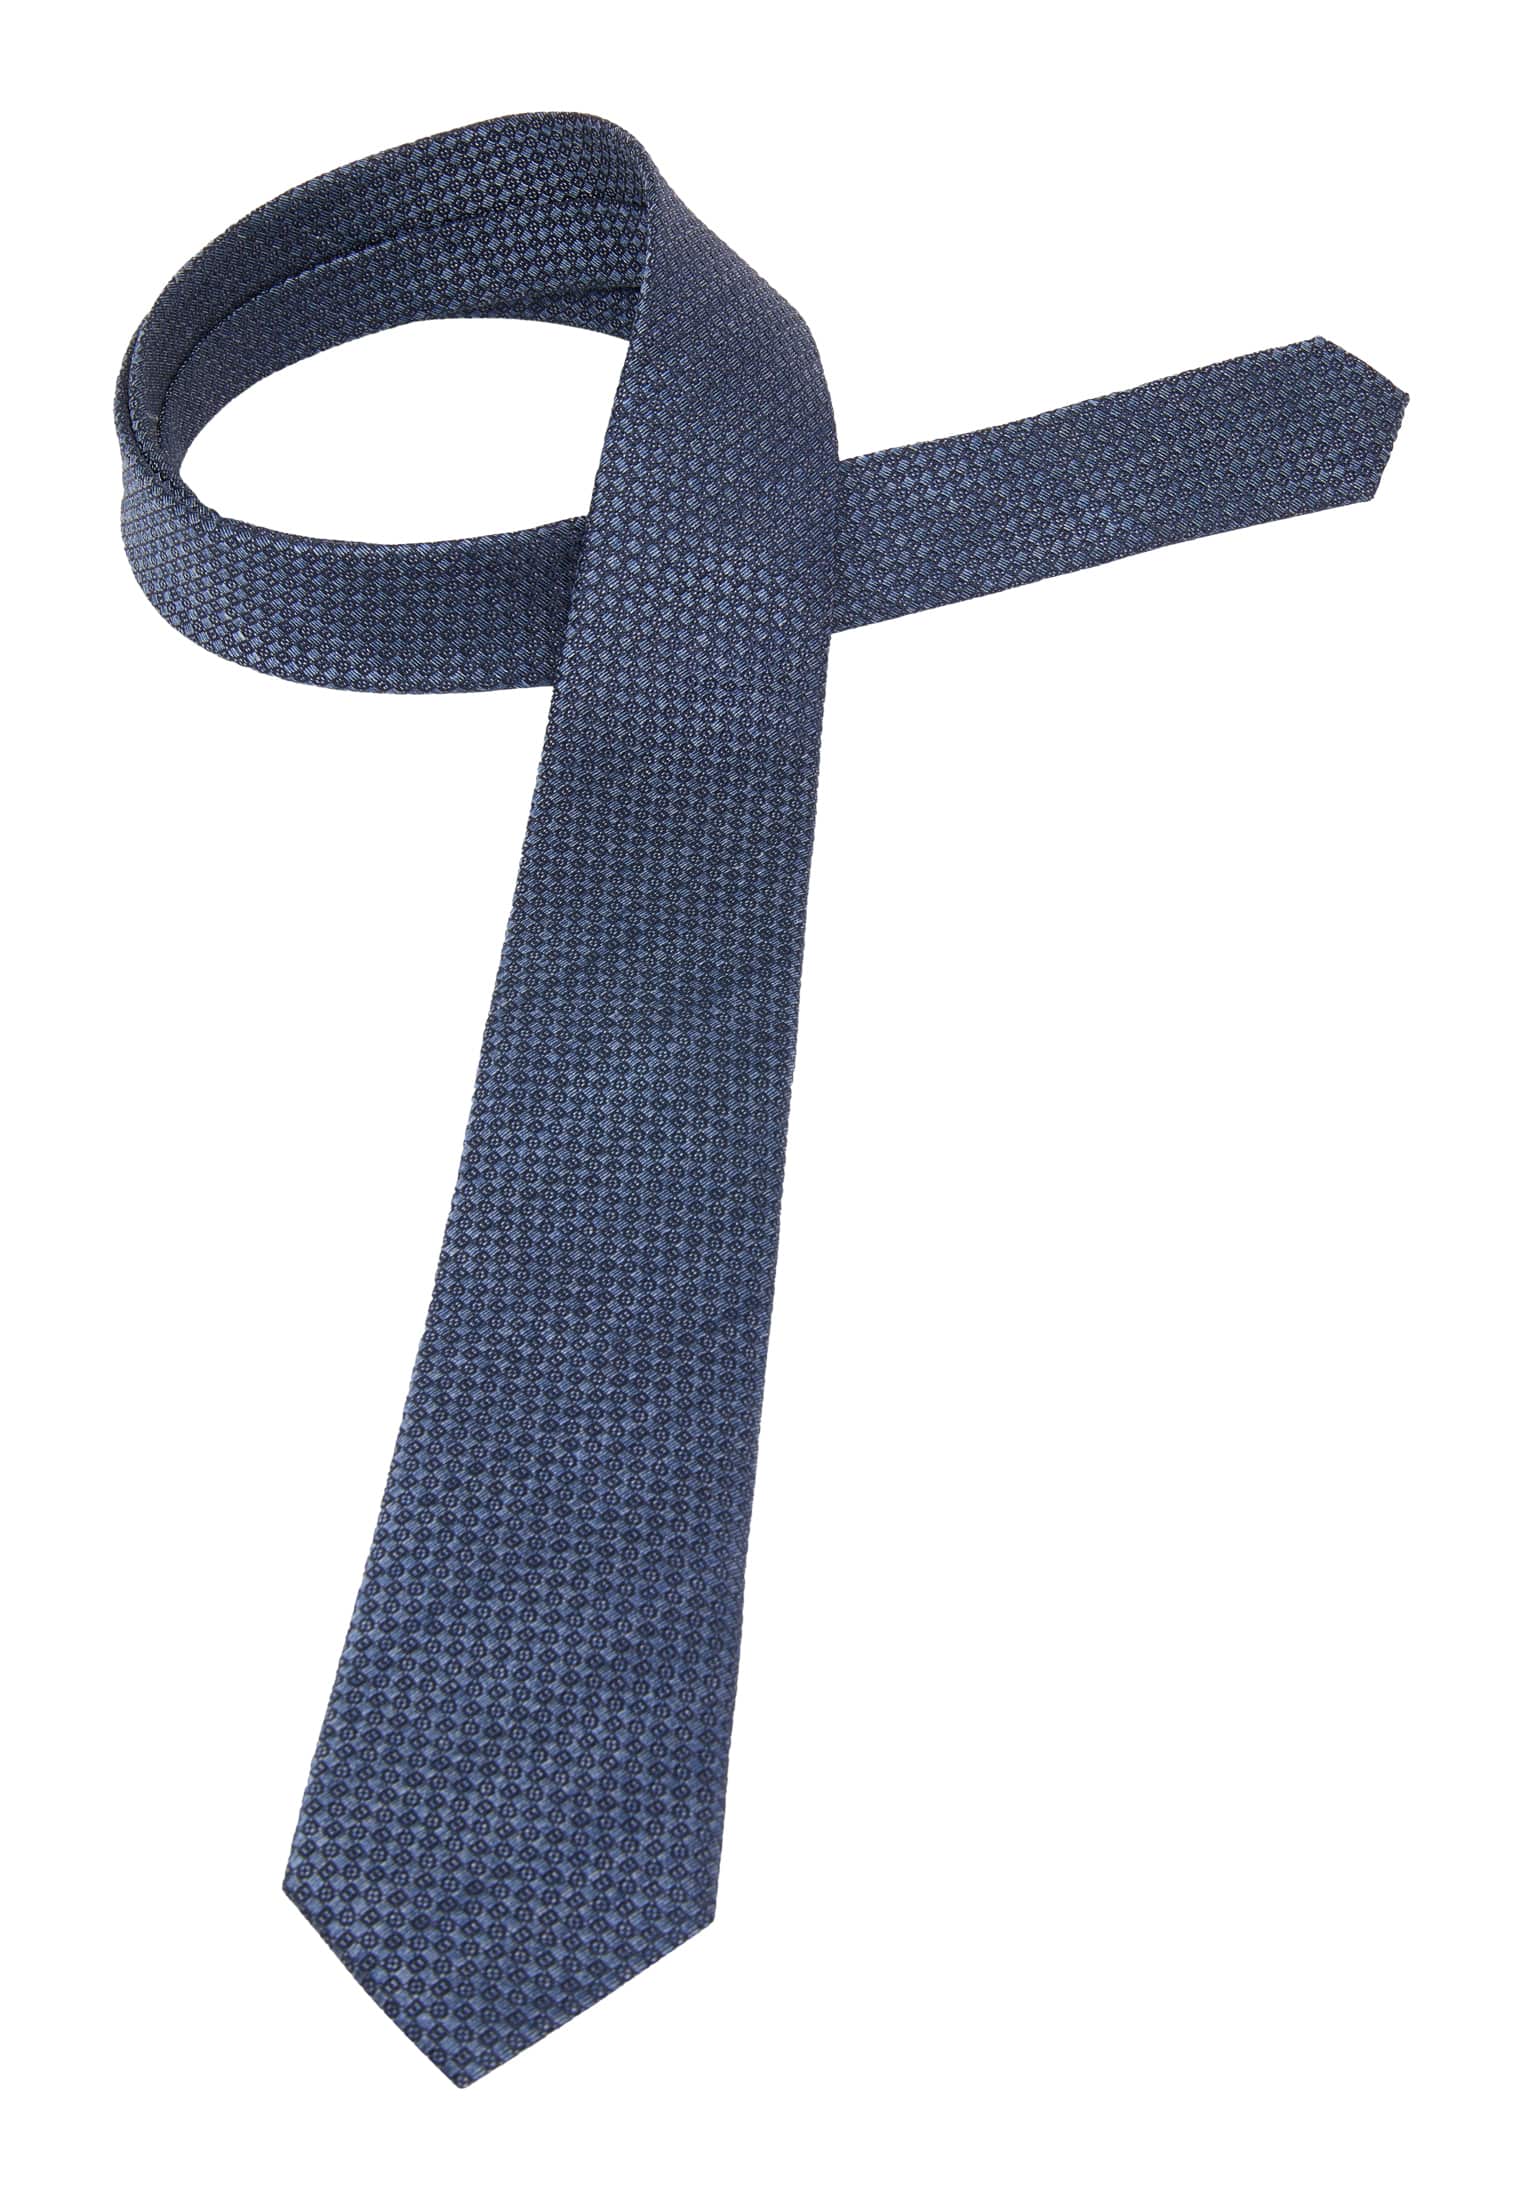 Krawatte in blaugrau strukturiert | 142 1AC02045-01-63-142 | blaugrau 